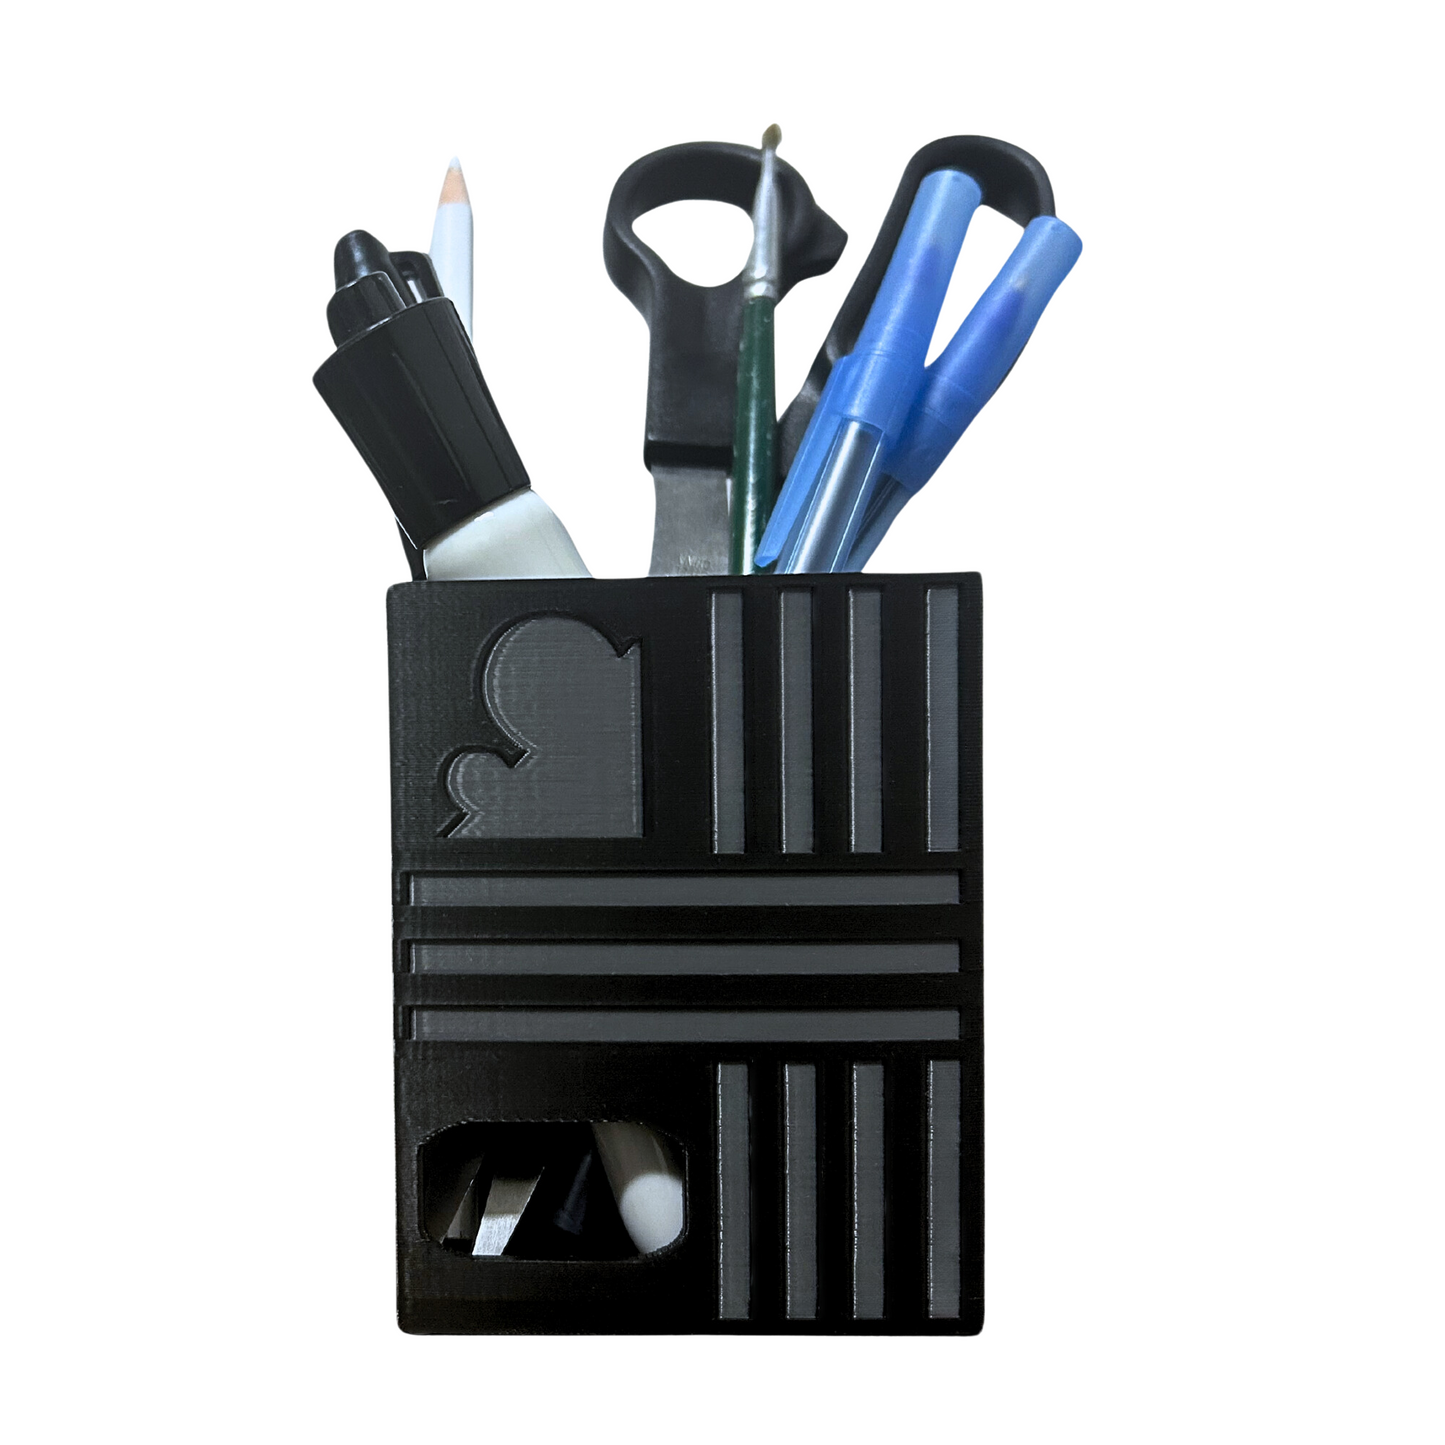 Pen Holder/Desktop Organizer